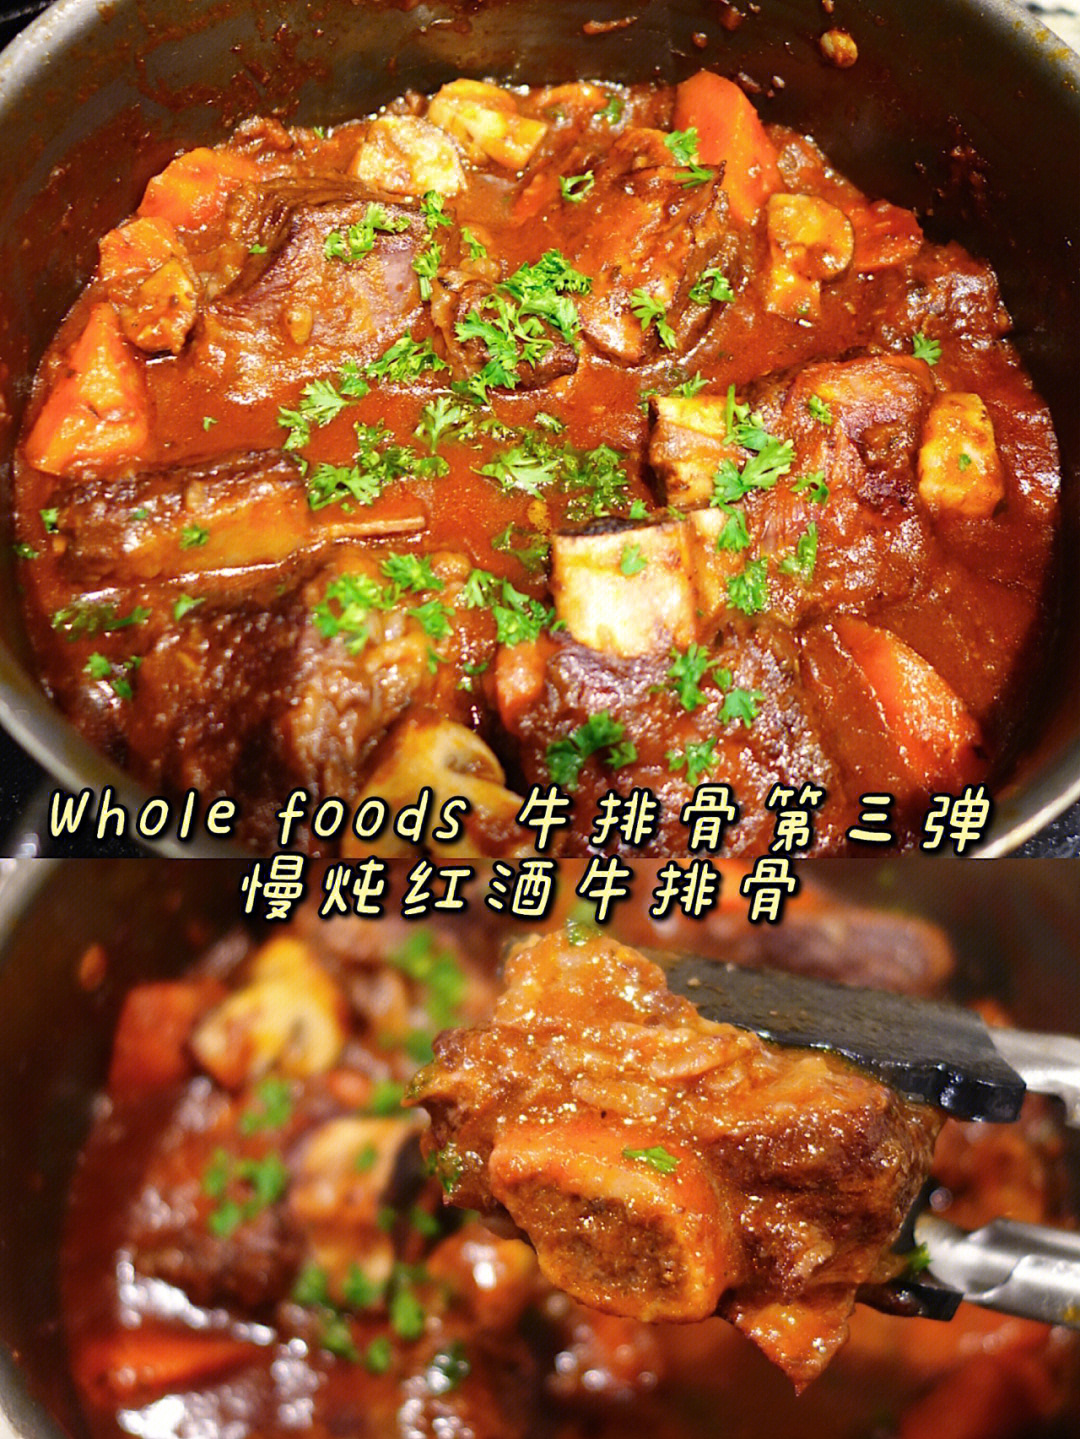 wholefoods牛排骨菜谱309慢炖红酒番茄牛骨